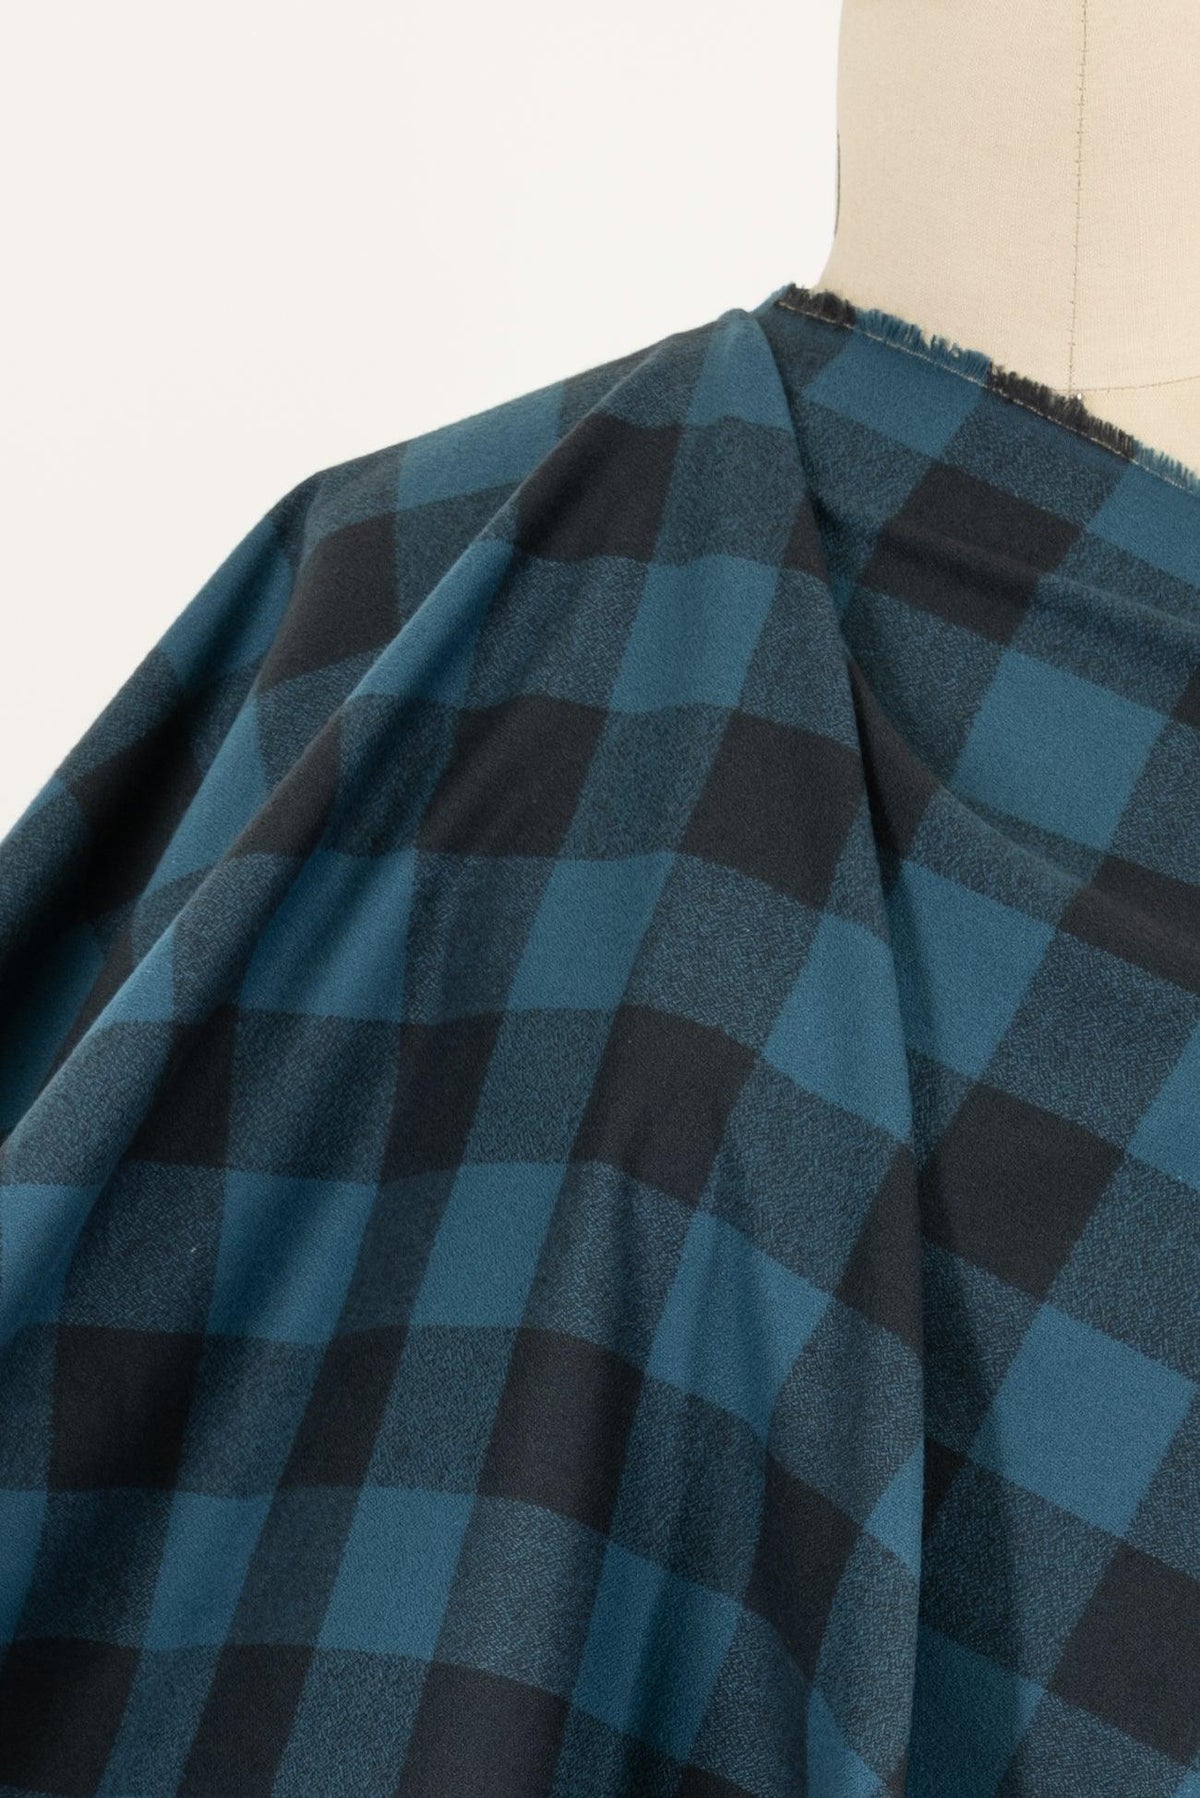 Bozeman Blue Checks Cotton Flannel Woven - Marcy Tilton Fabrics